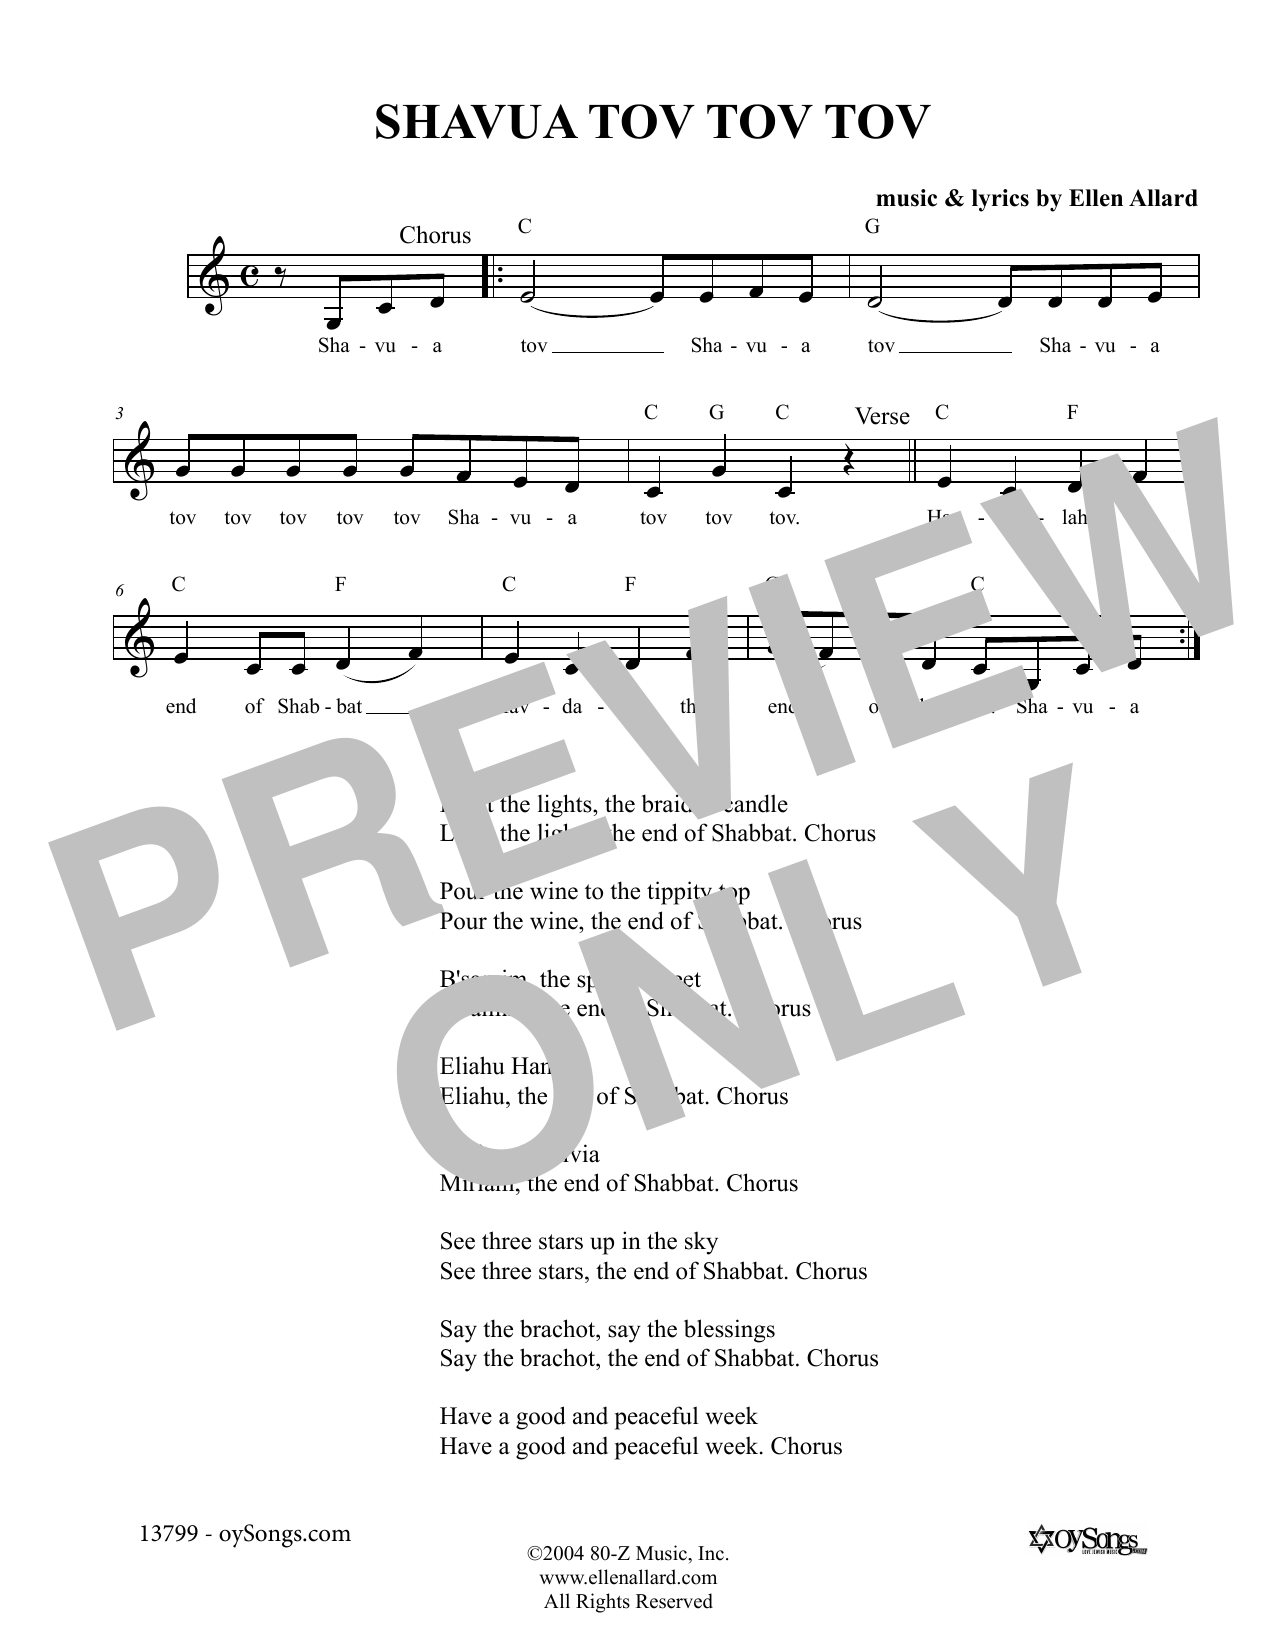 Ellen Allard Shavua Tov Tov Tov Sheet Music Notes & Chords for Melody Line, Lyrics & Chords - Download or Print PDF